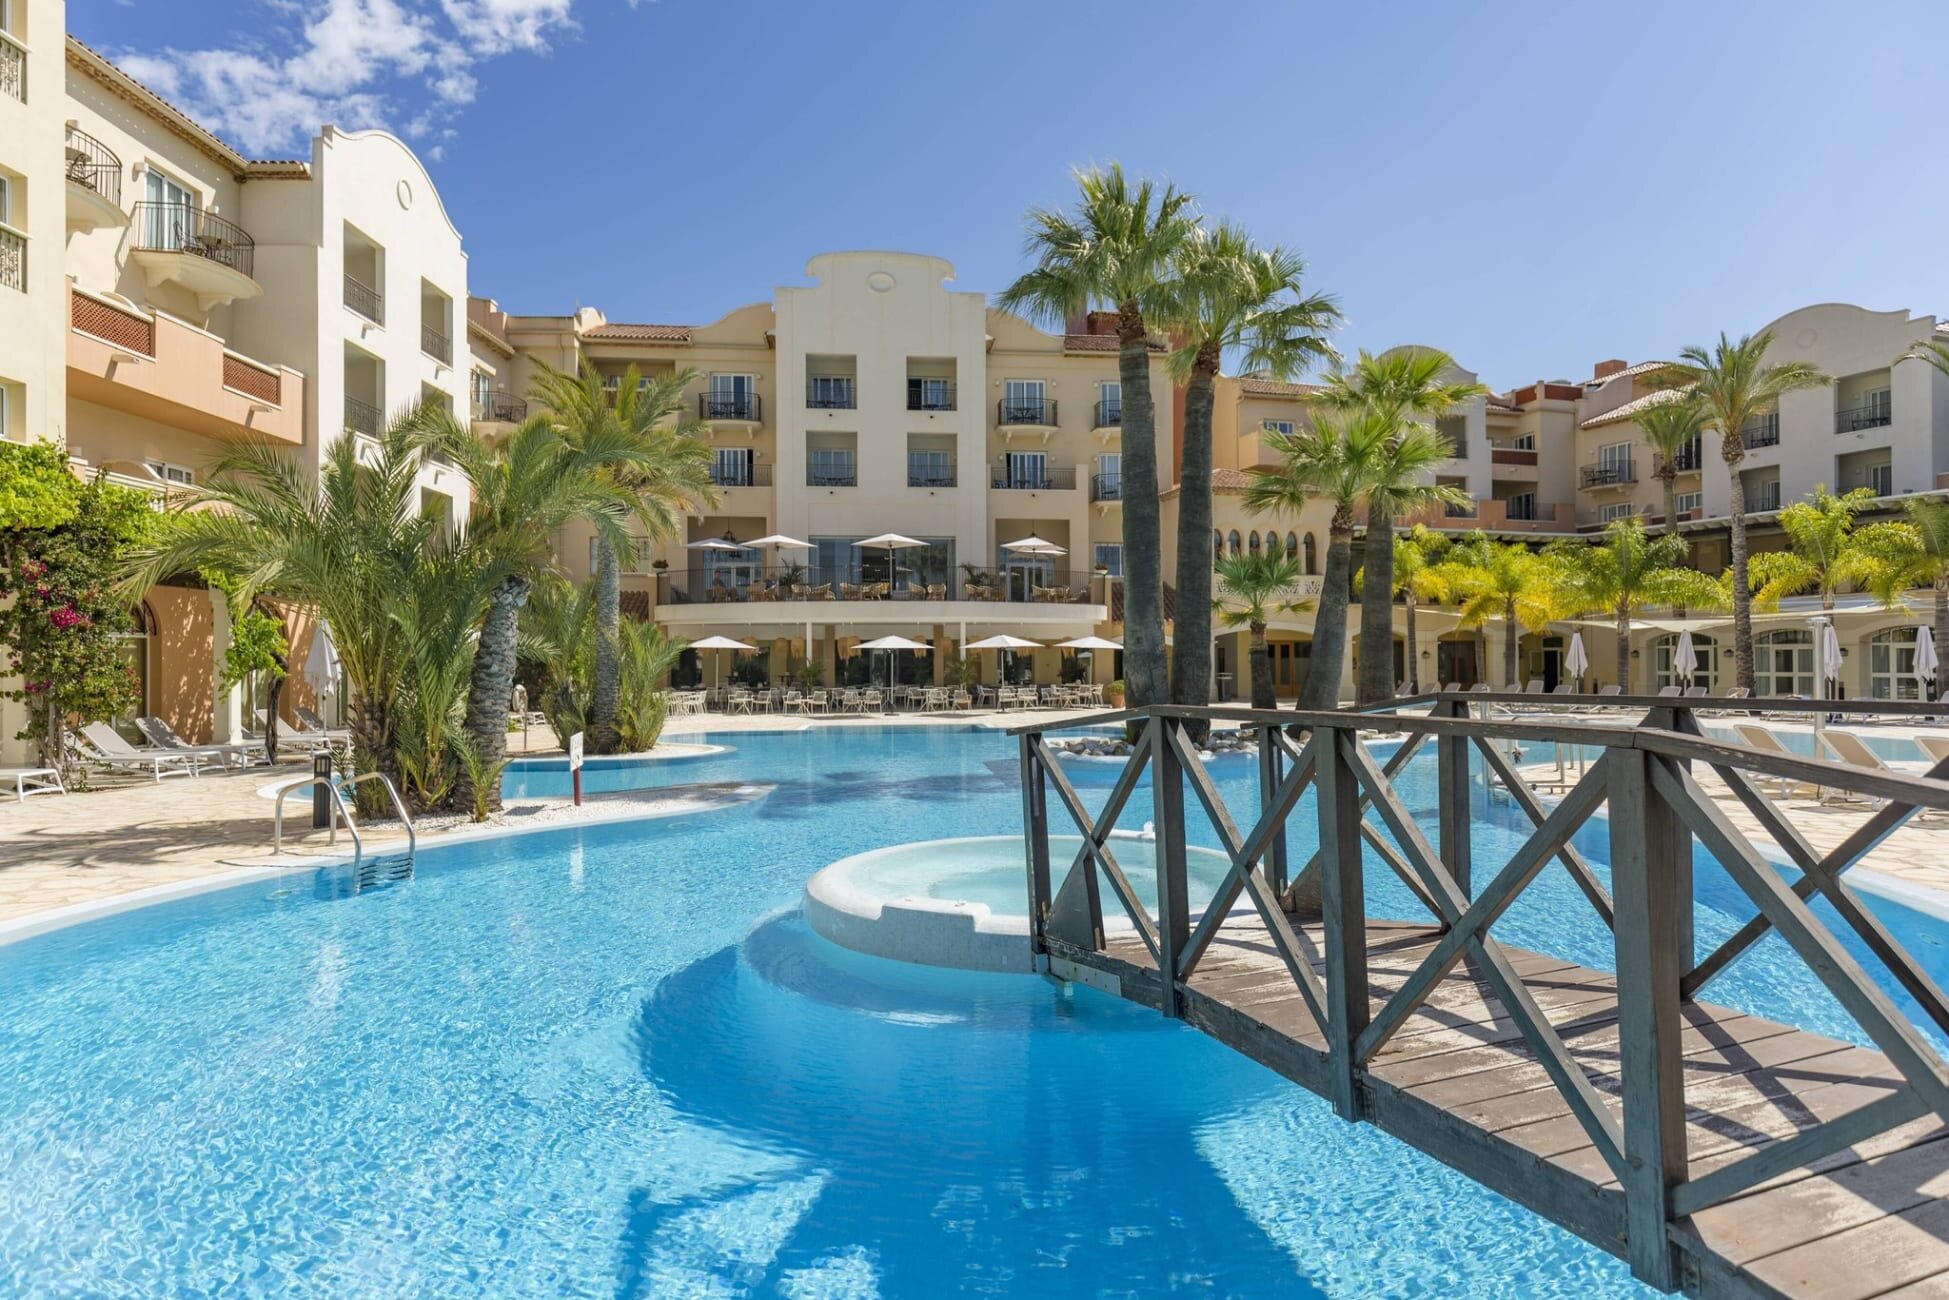 Hotel Marriott Denia, Alicante